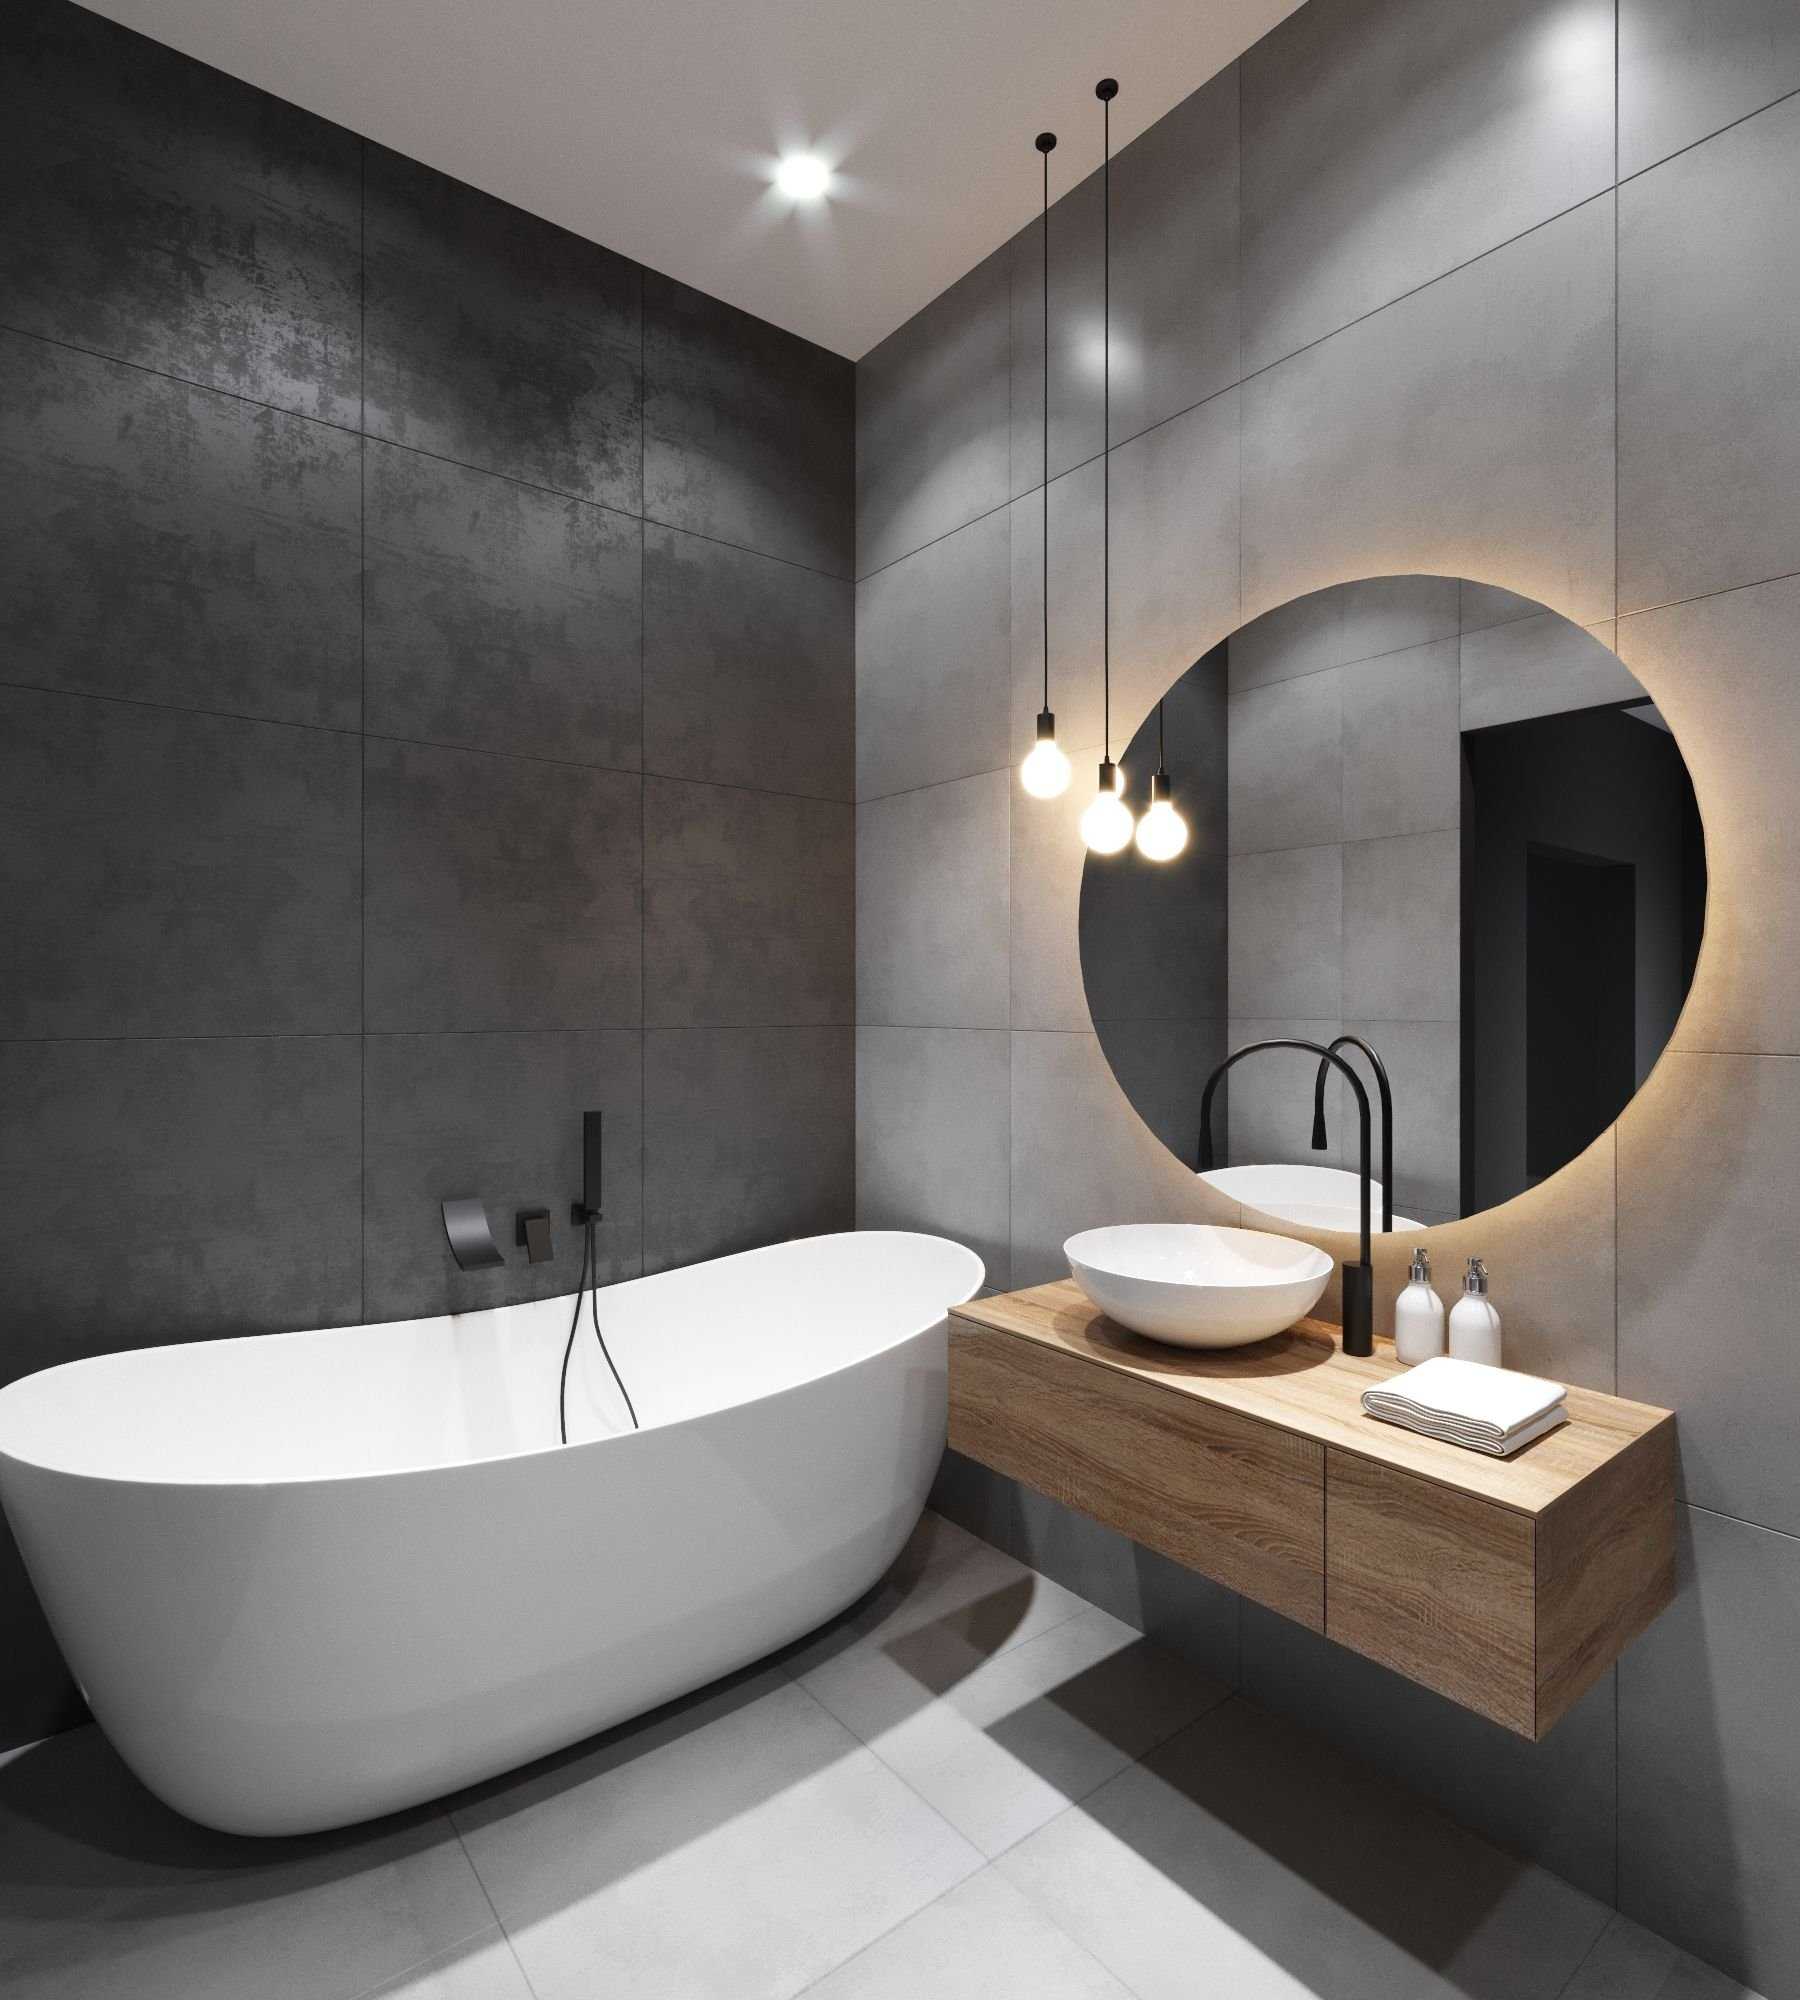 Ремонт новой ванны. Зеркало для ванной maskota Villanelle. Стмотная ванная комната. Современная ванная комната. Современные Ванные комнаты.